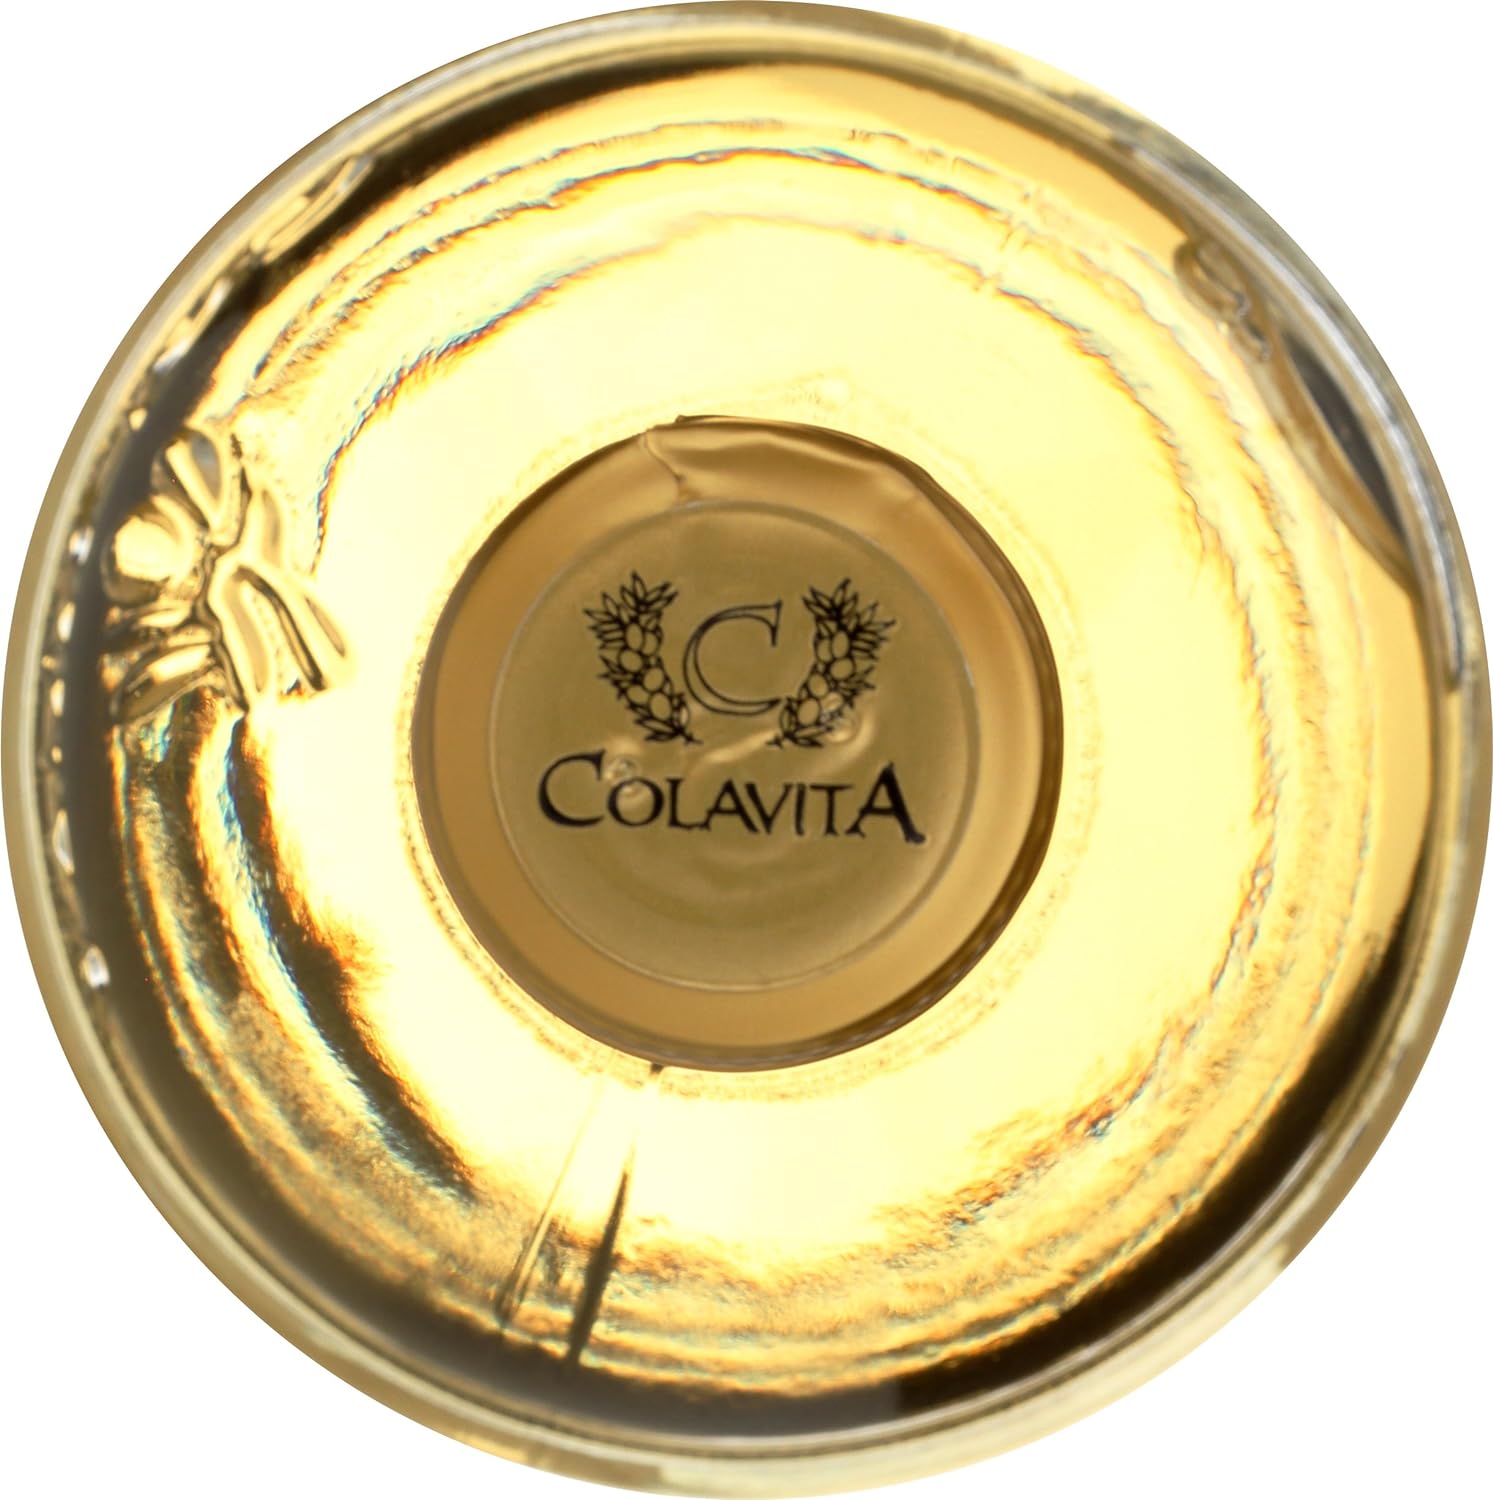 Colavita Balsamic Vinegar - Classic White Balsamic Vinegar, 17 Fl Oz : Grocery & Gourmet Food